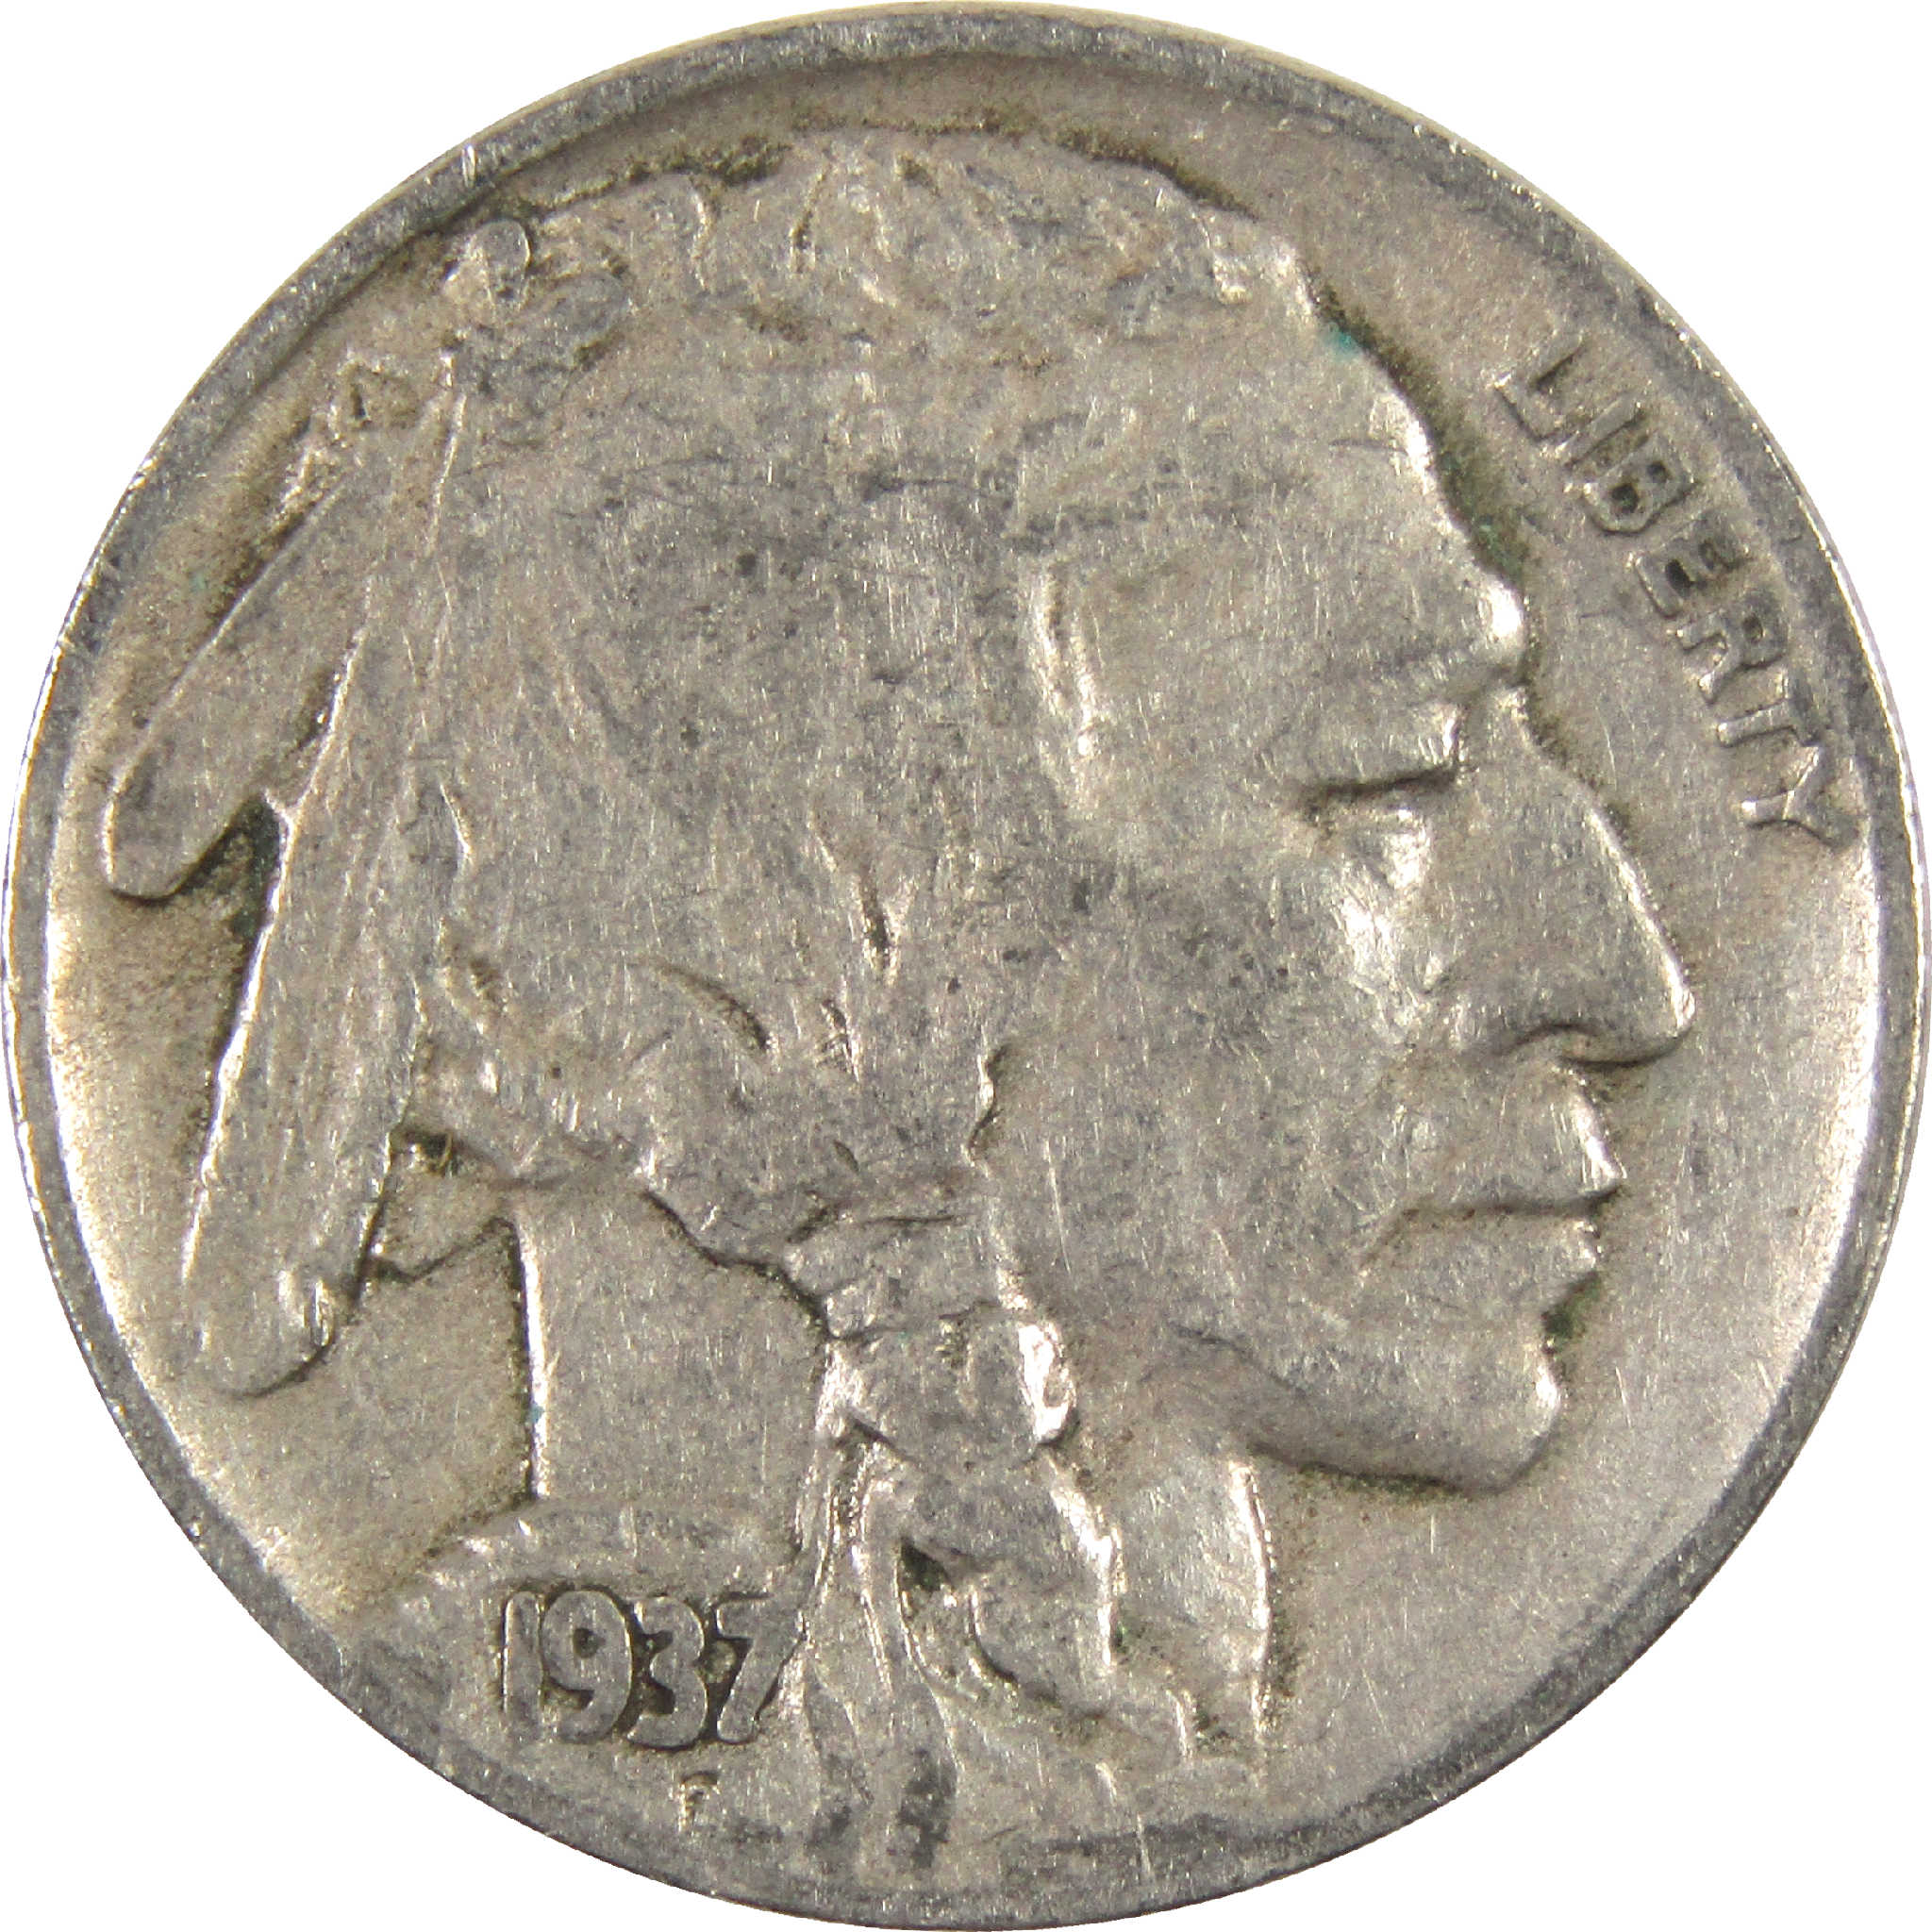 1937 S Indian Head Buffalo Nickel F Fine 5c Coin